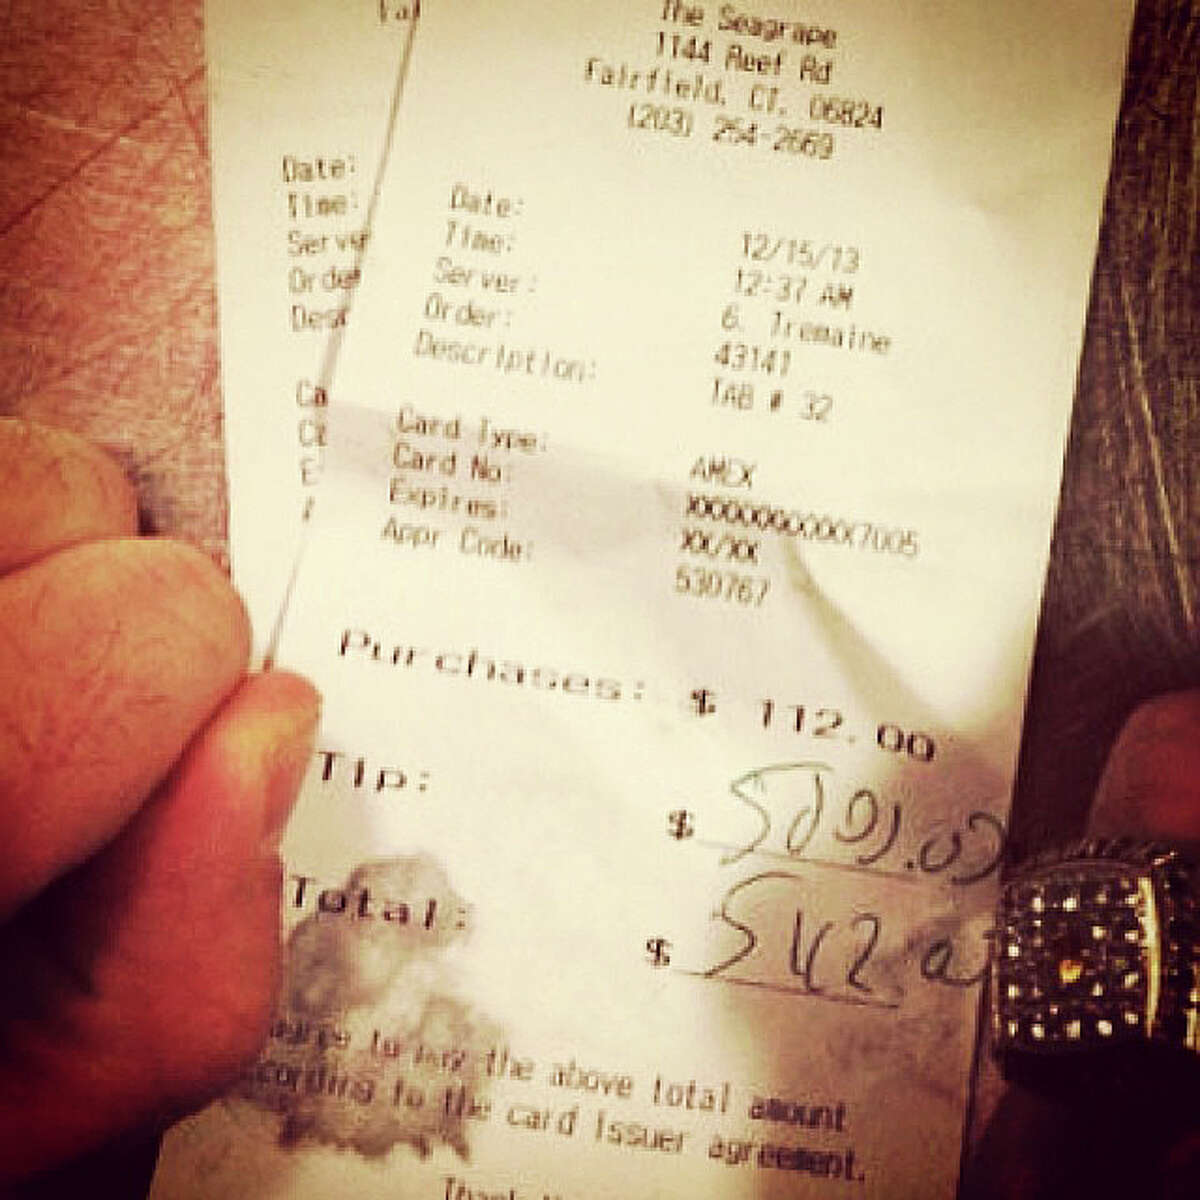 $5,000 tip on $112 Seagrape bar tab: 'Tips for Jesus' gratuity is no joke